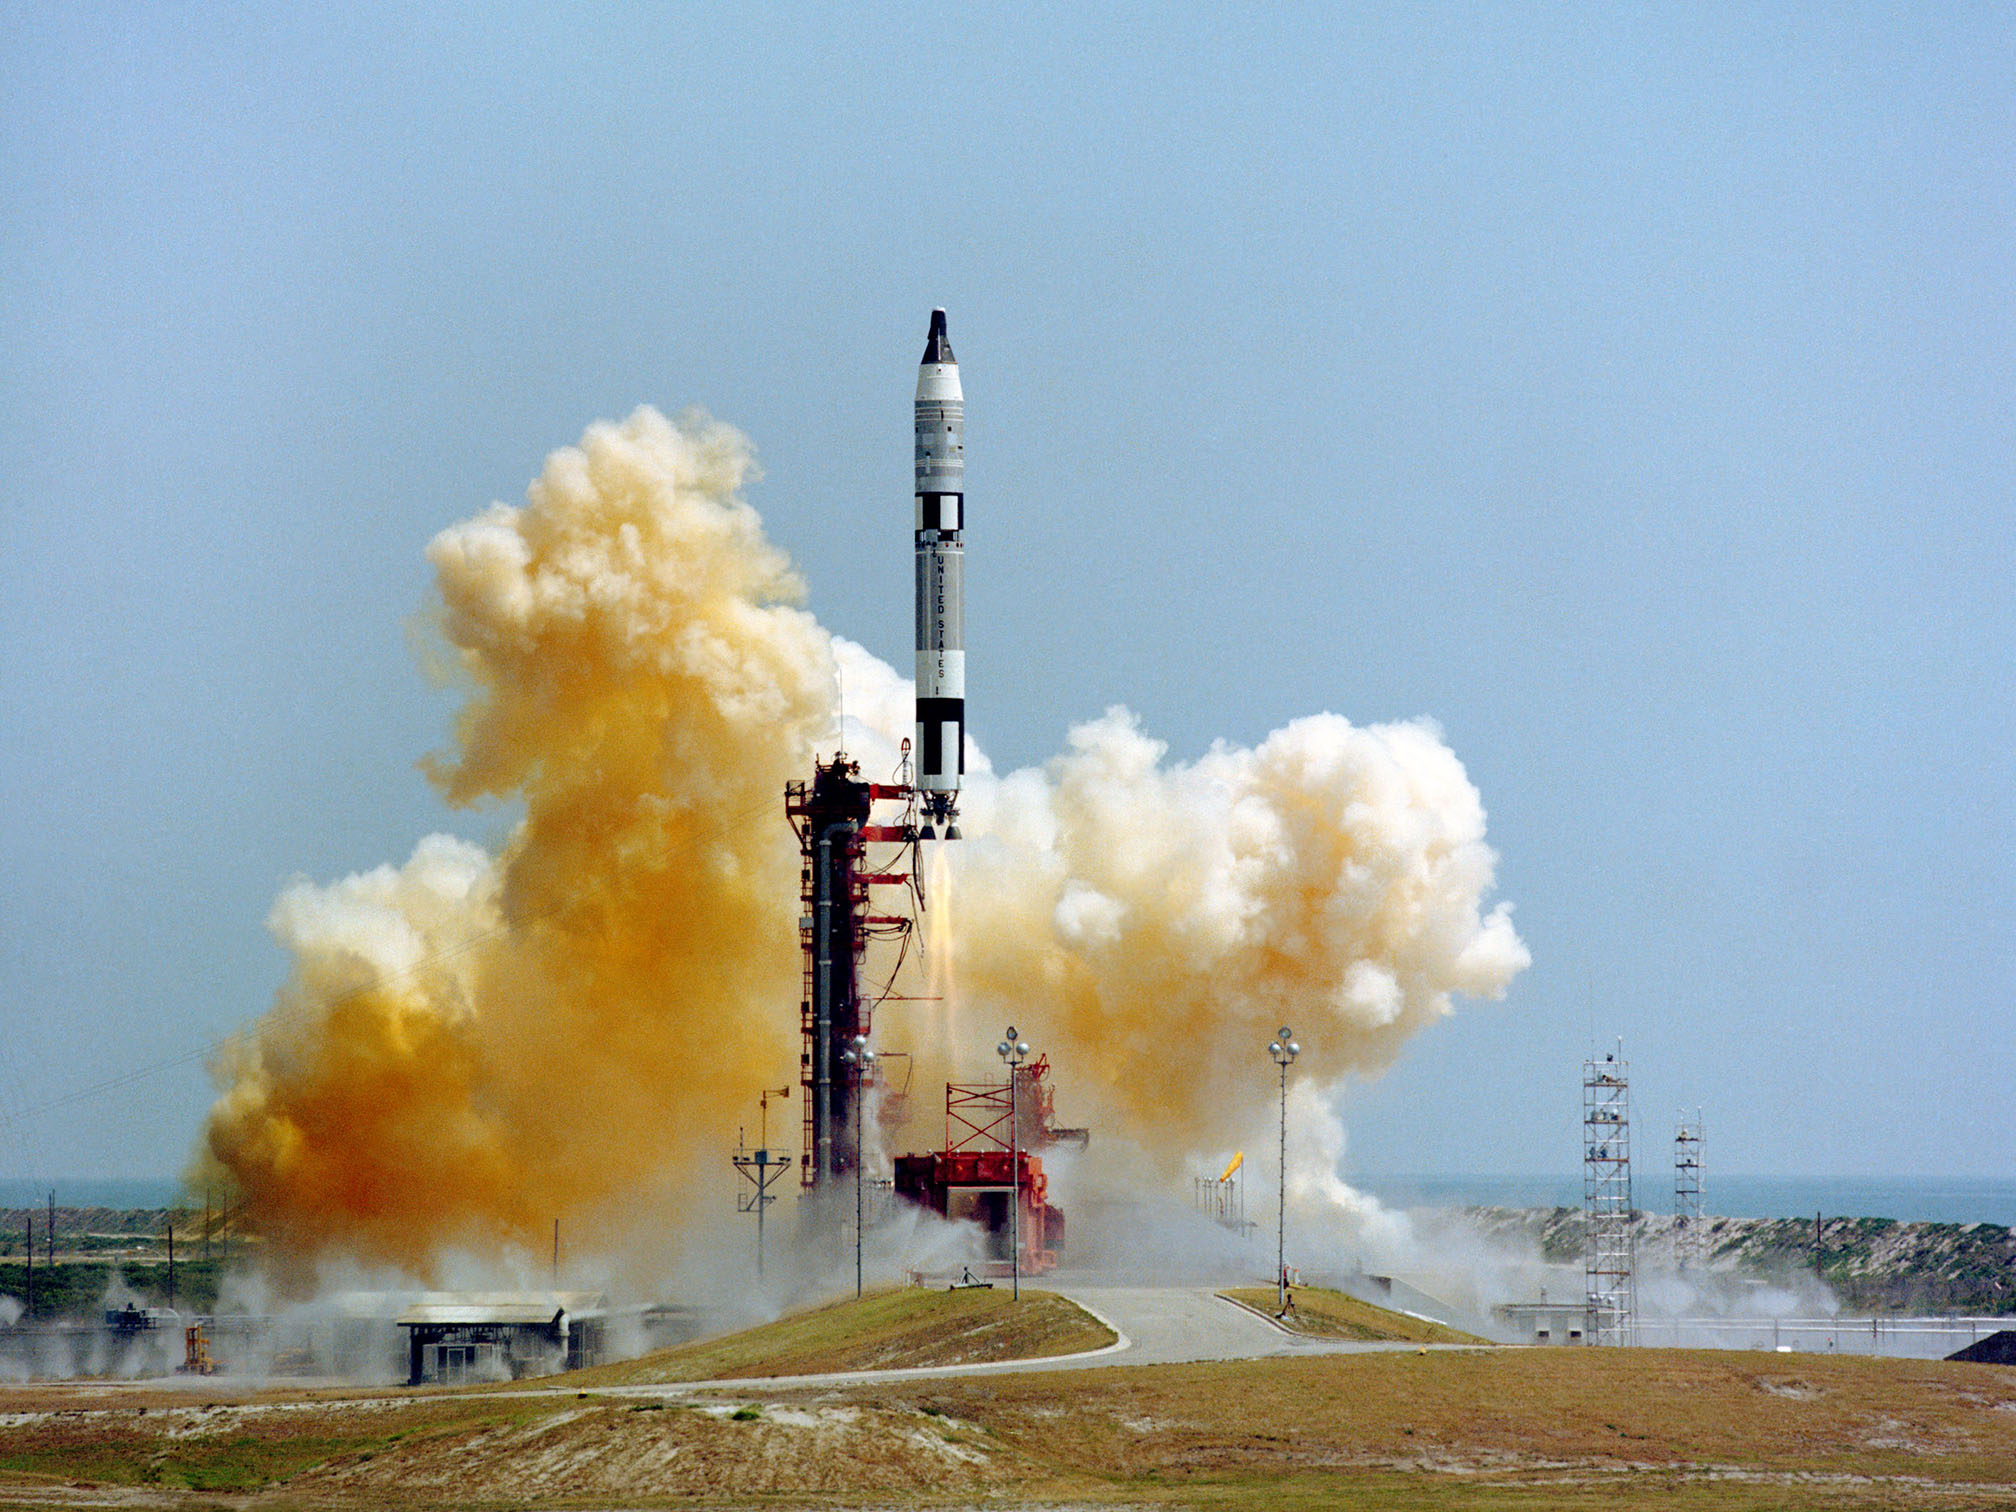 The Titan II rocket for the Gemini program